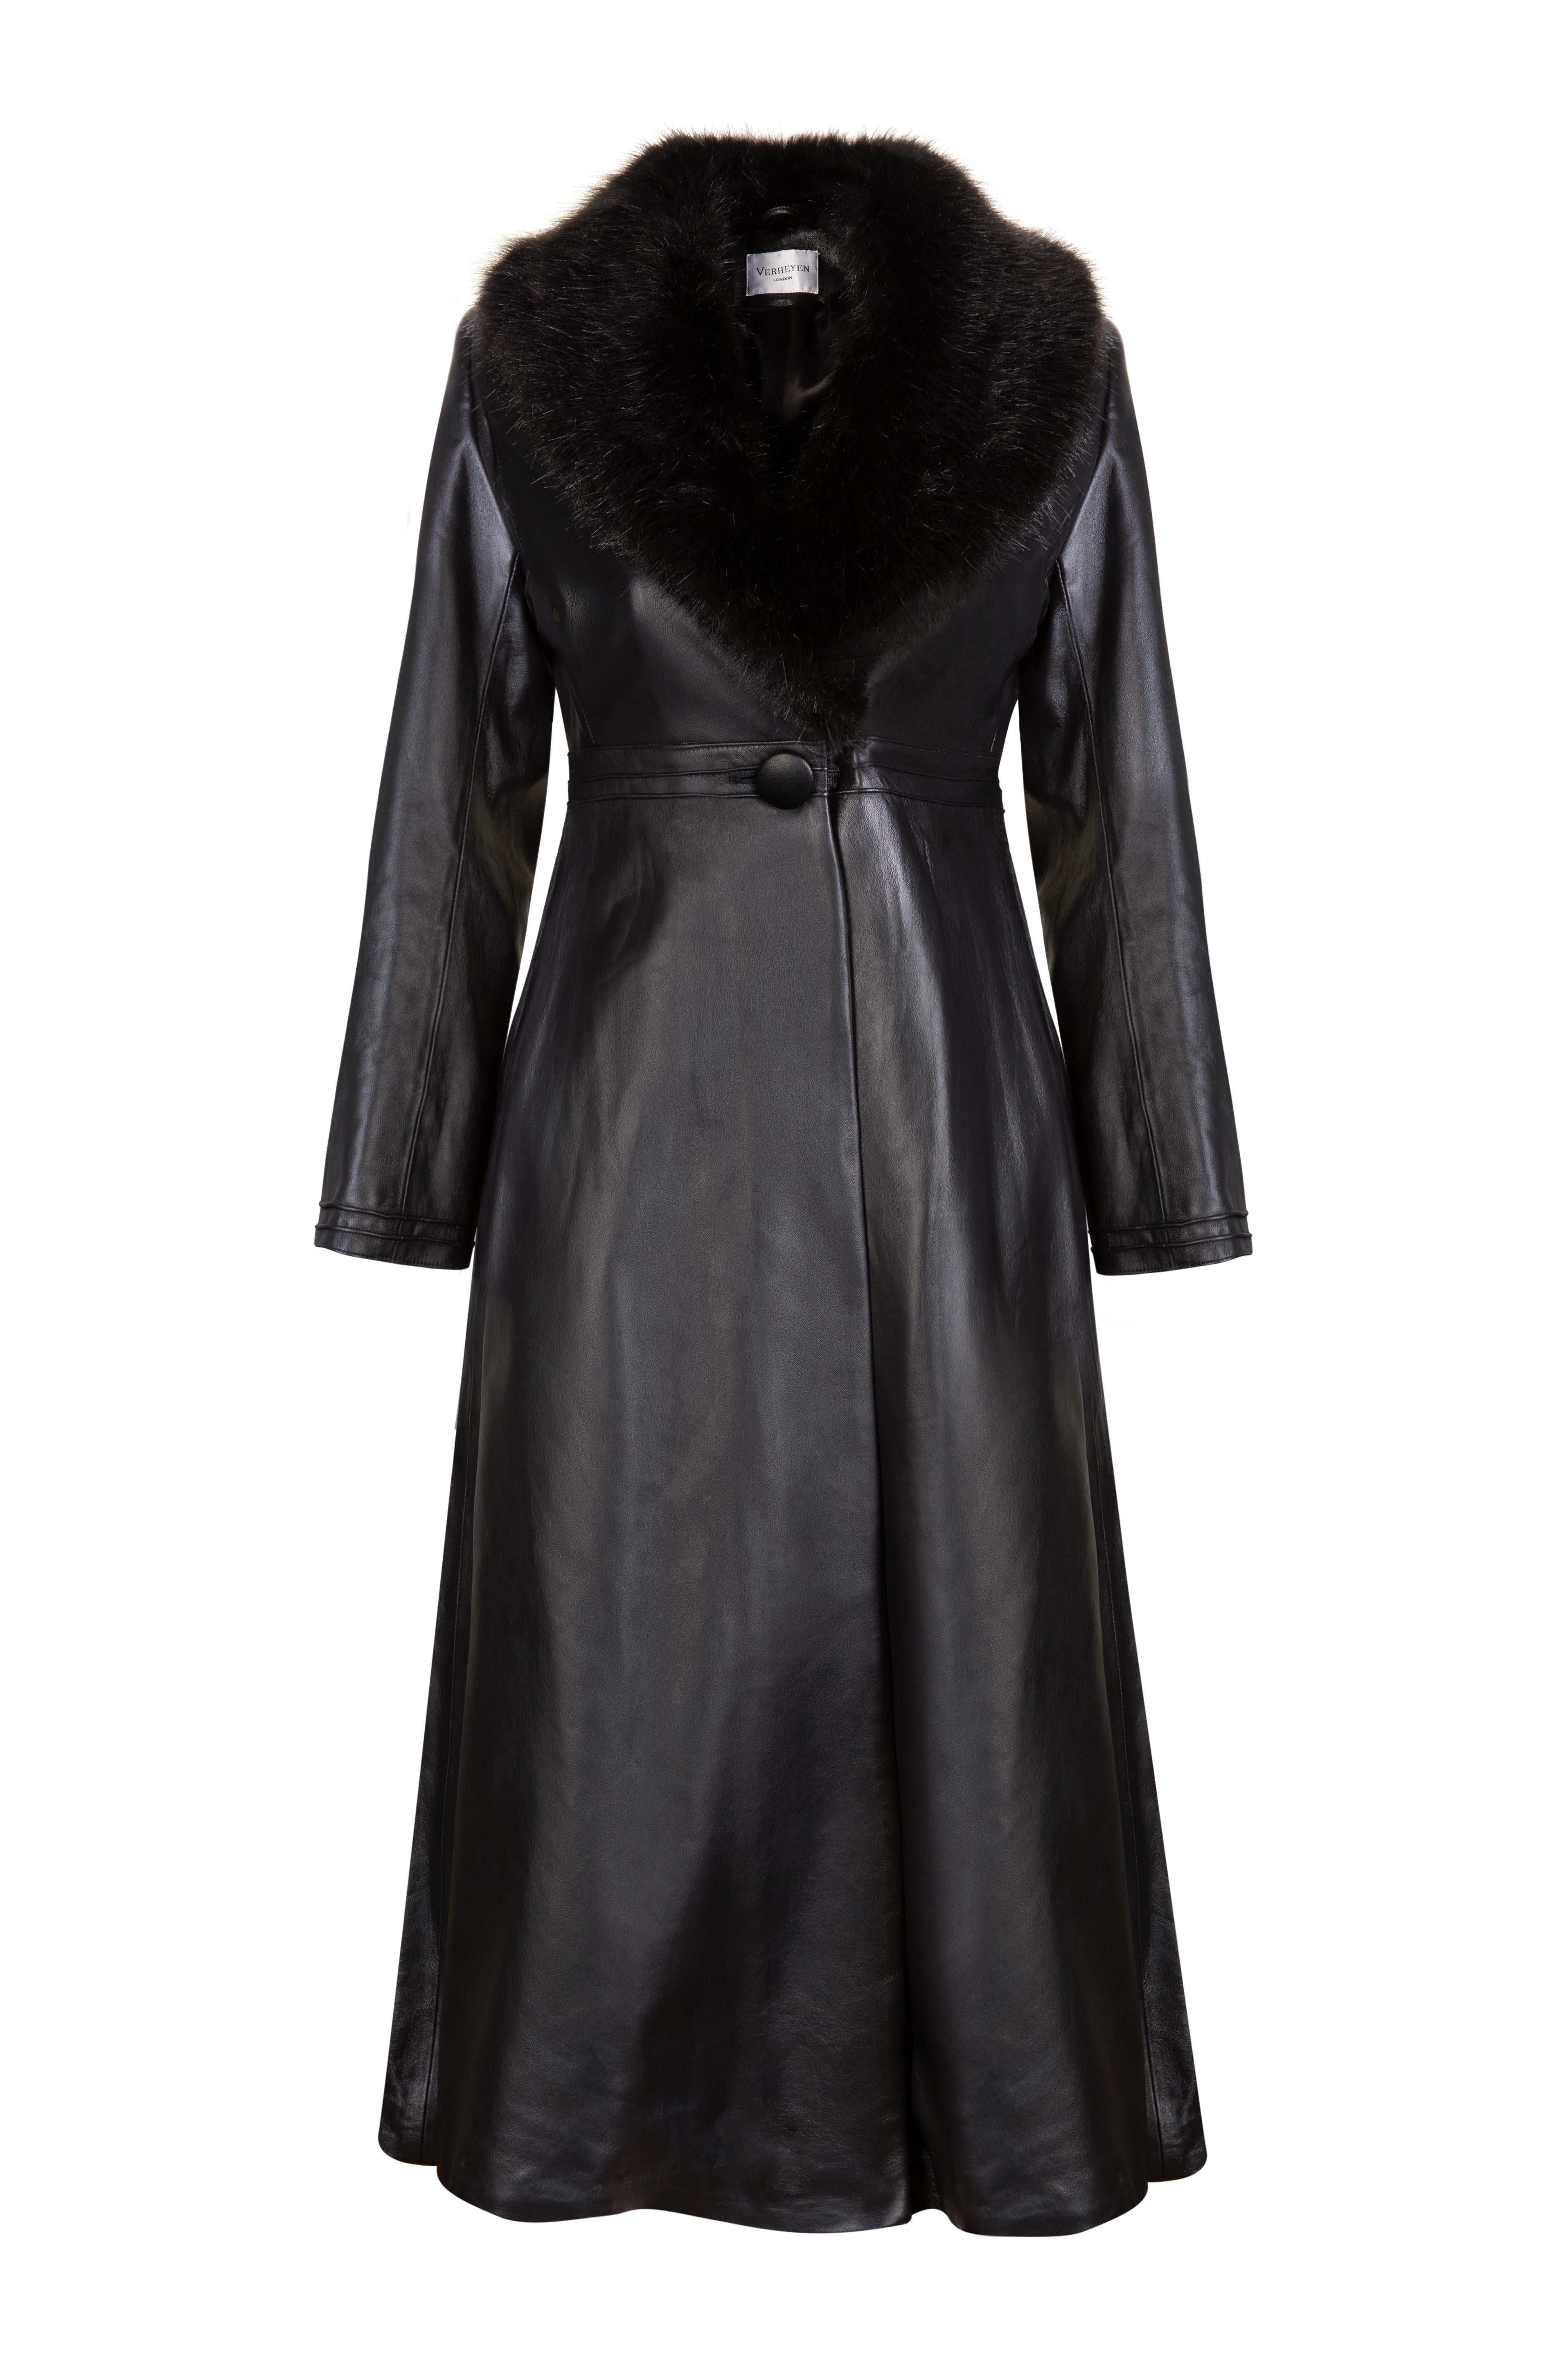 Verheyen London Edward Leather Coat with Faux Fur Collar in Black - Size uk 14 For Sale 14